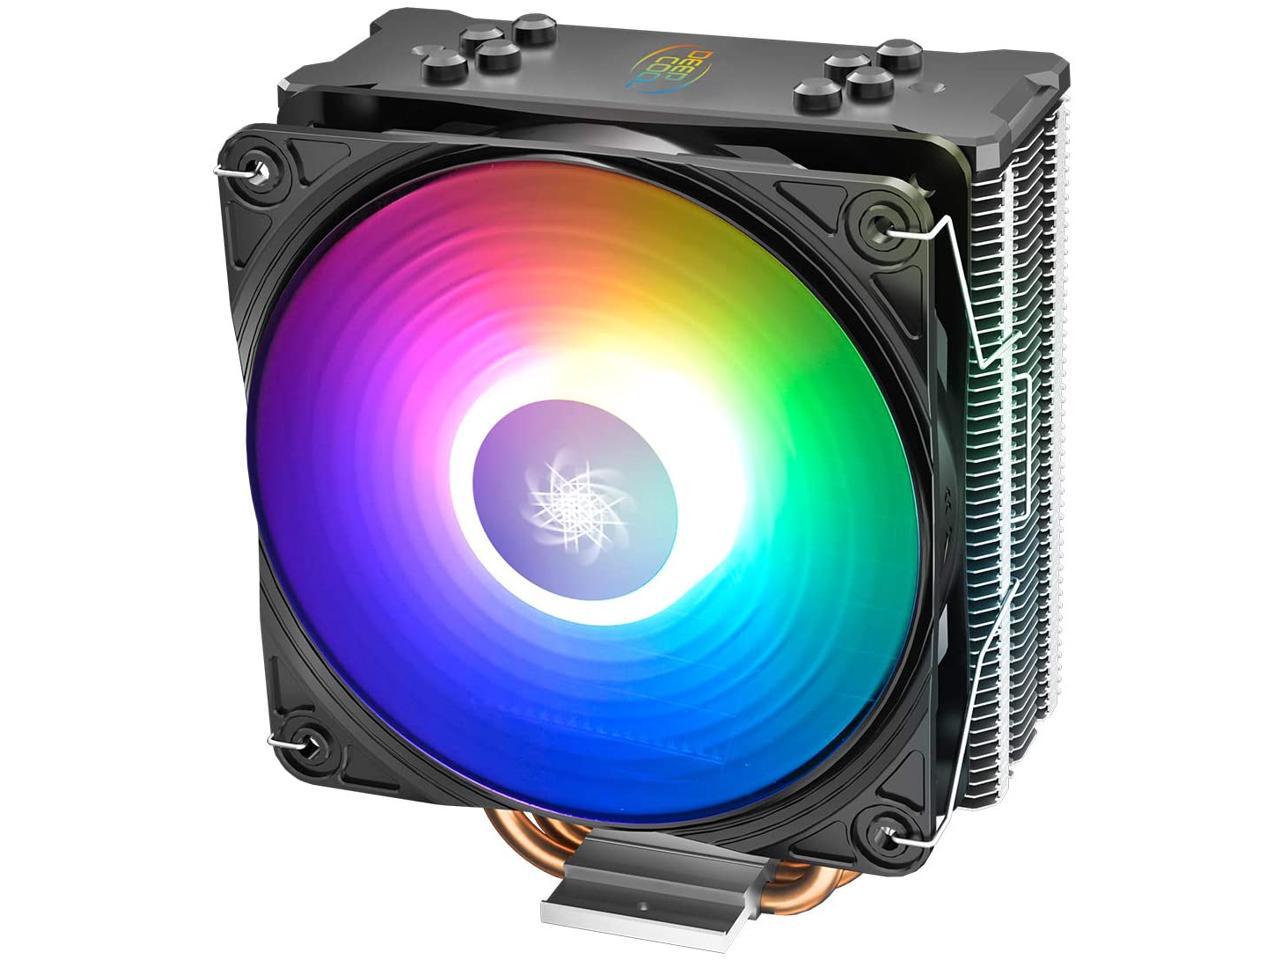 DEEPCOOL GAMMAXX GT A-RGB CPU Cooler w/ RGB Controller - 4 shaped Heatpipes, 120mm Addressable RGB PWM Fan